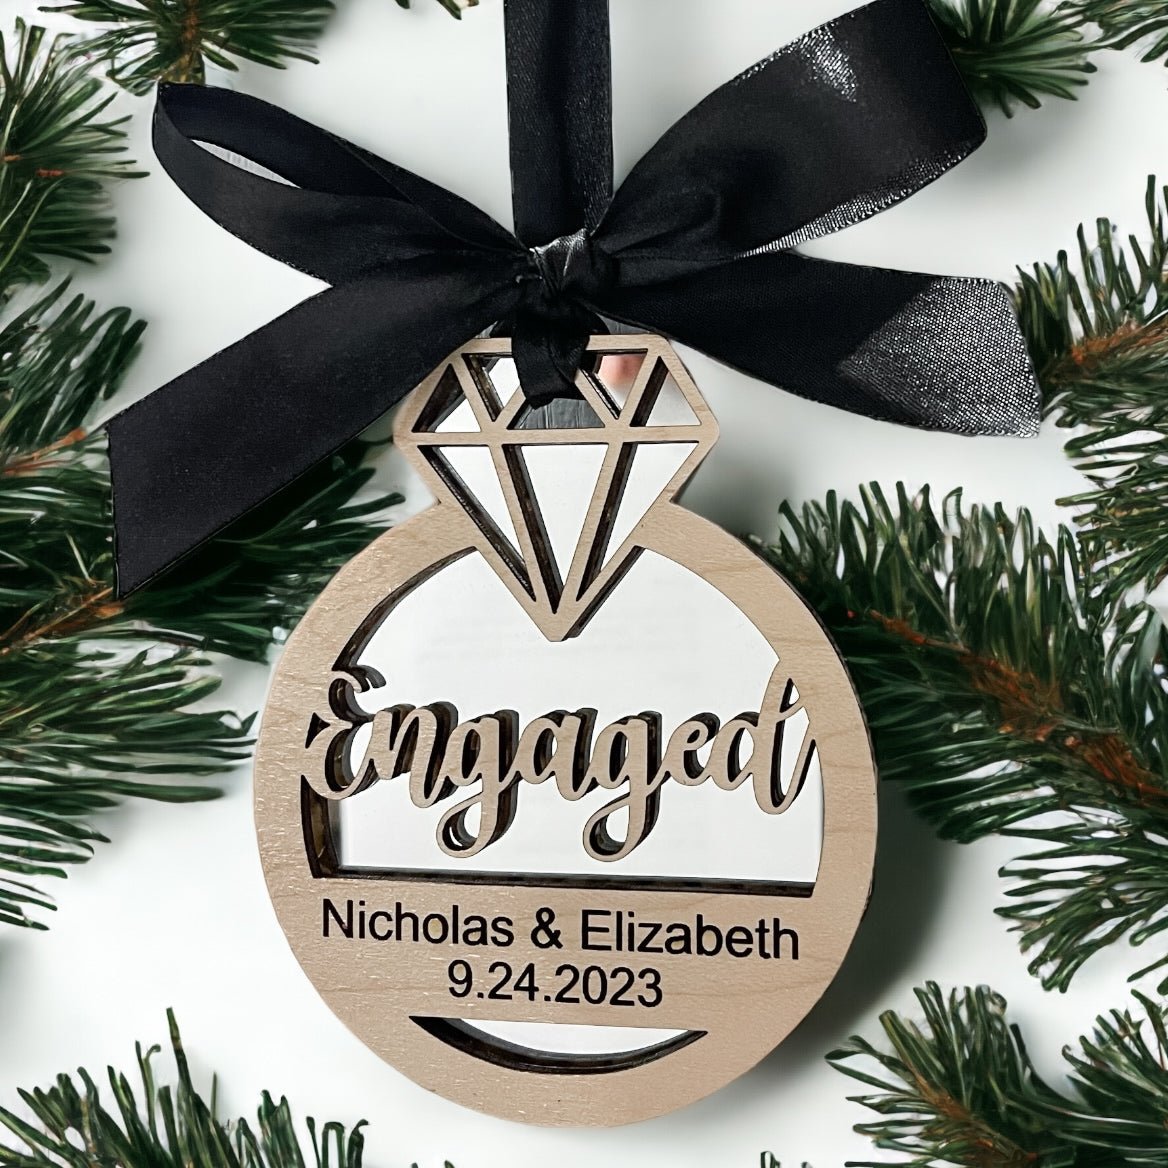 Married, Engaged Christmas Ornament Keepsake - Embellish My Heart